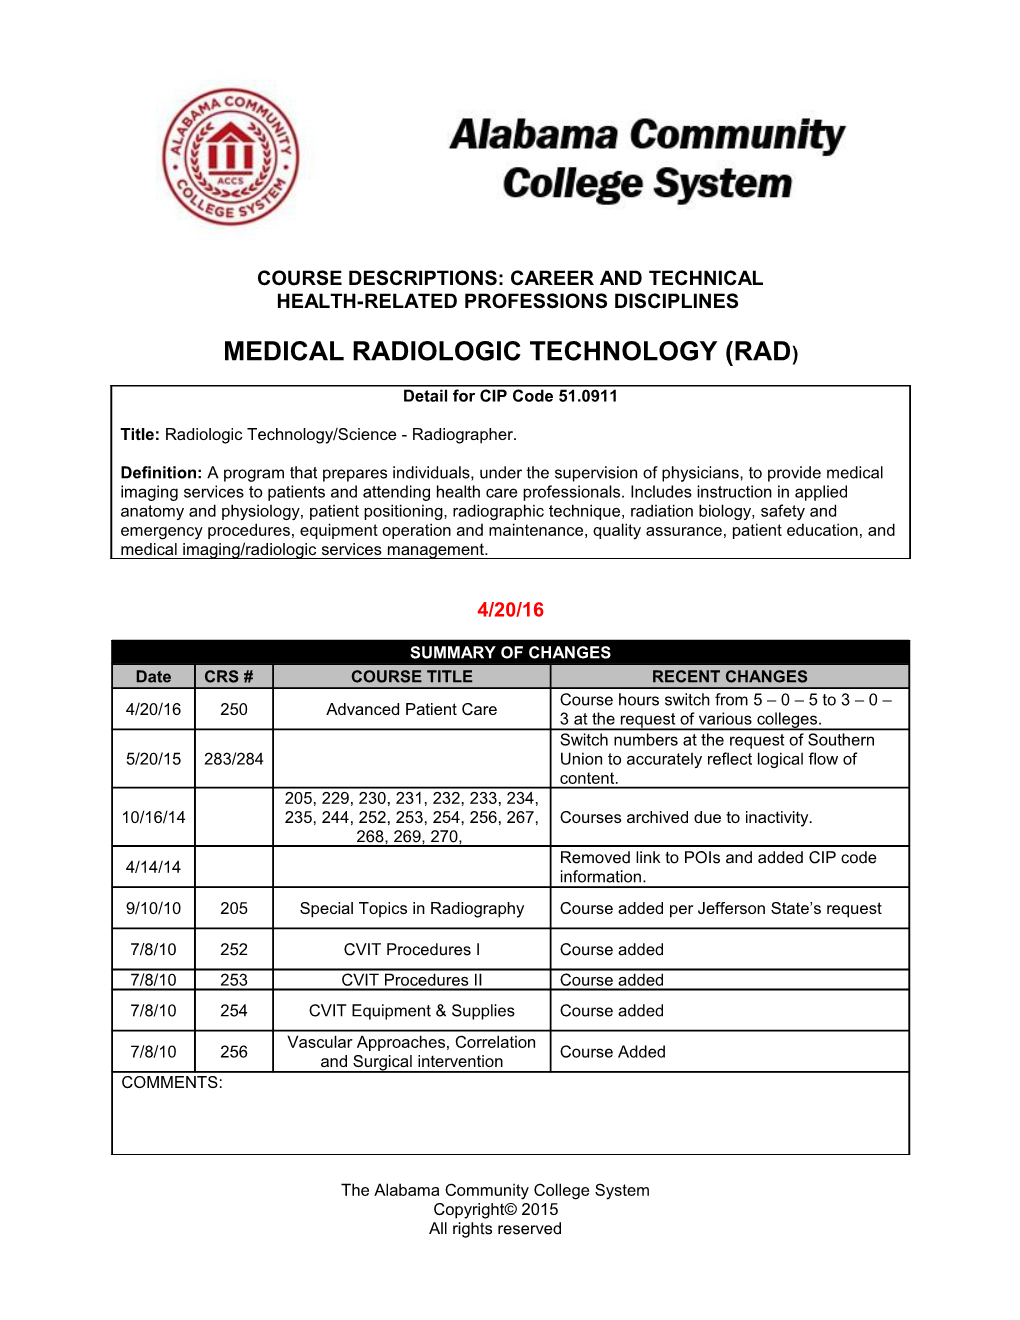 Medical Radiologic Technology